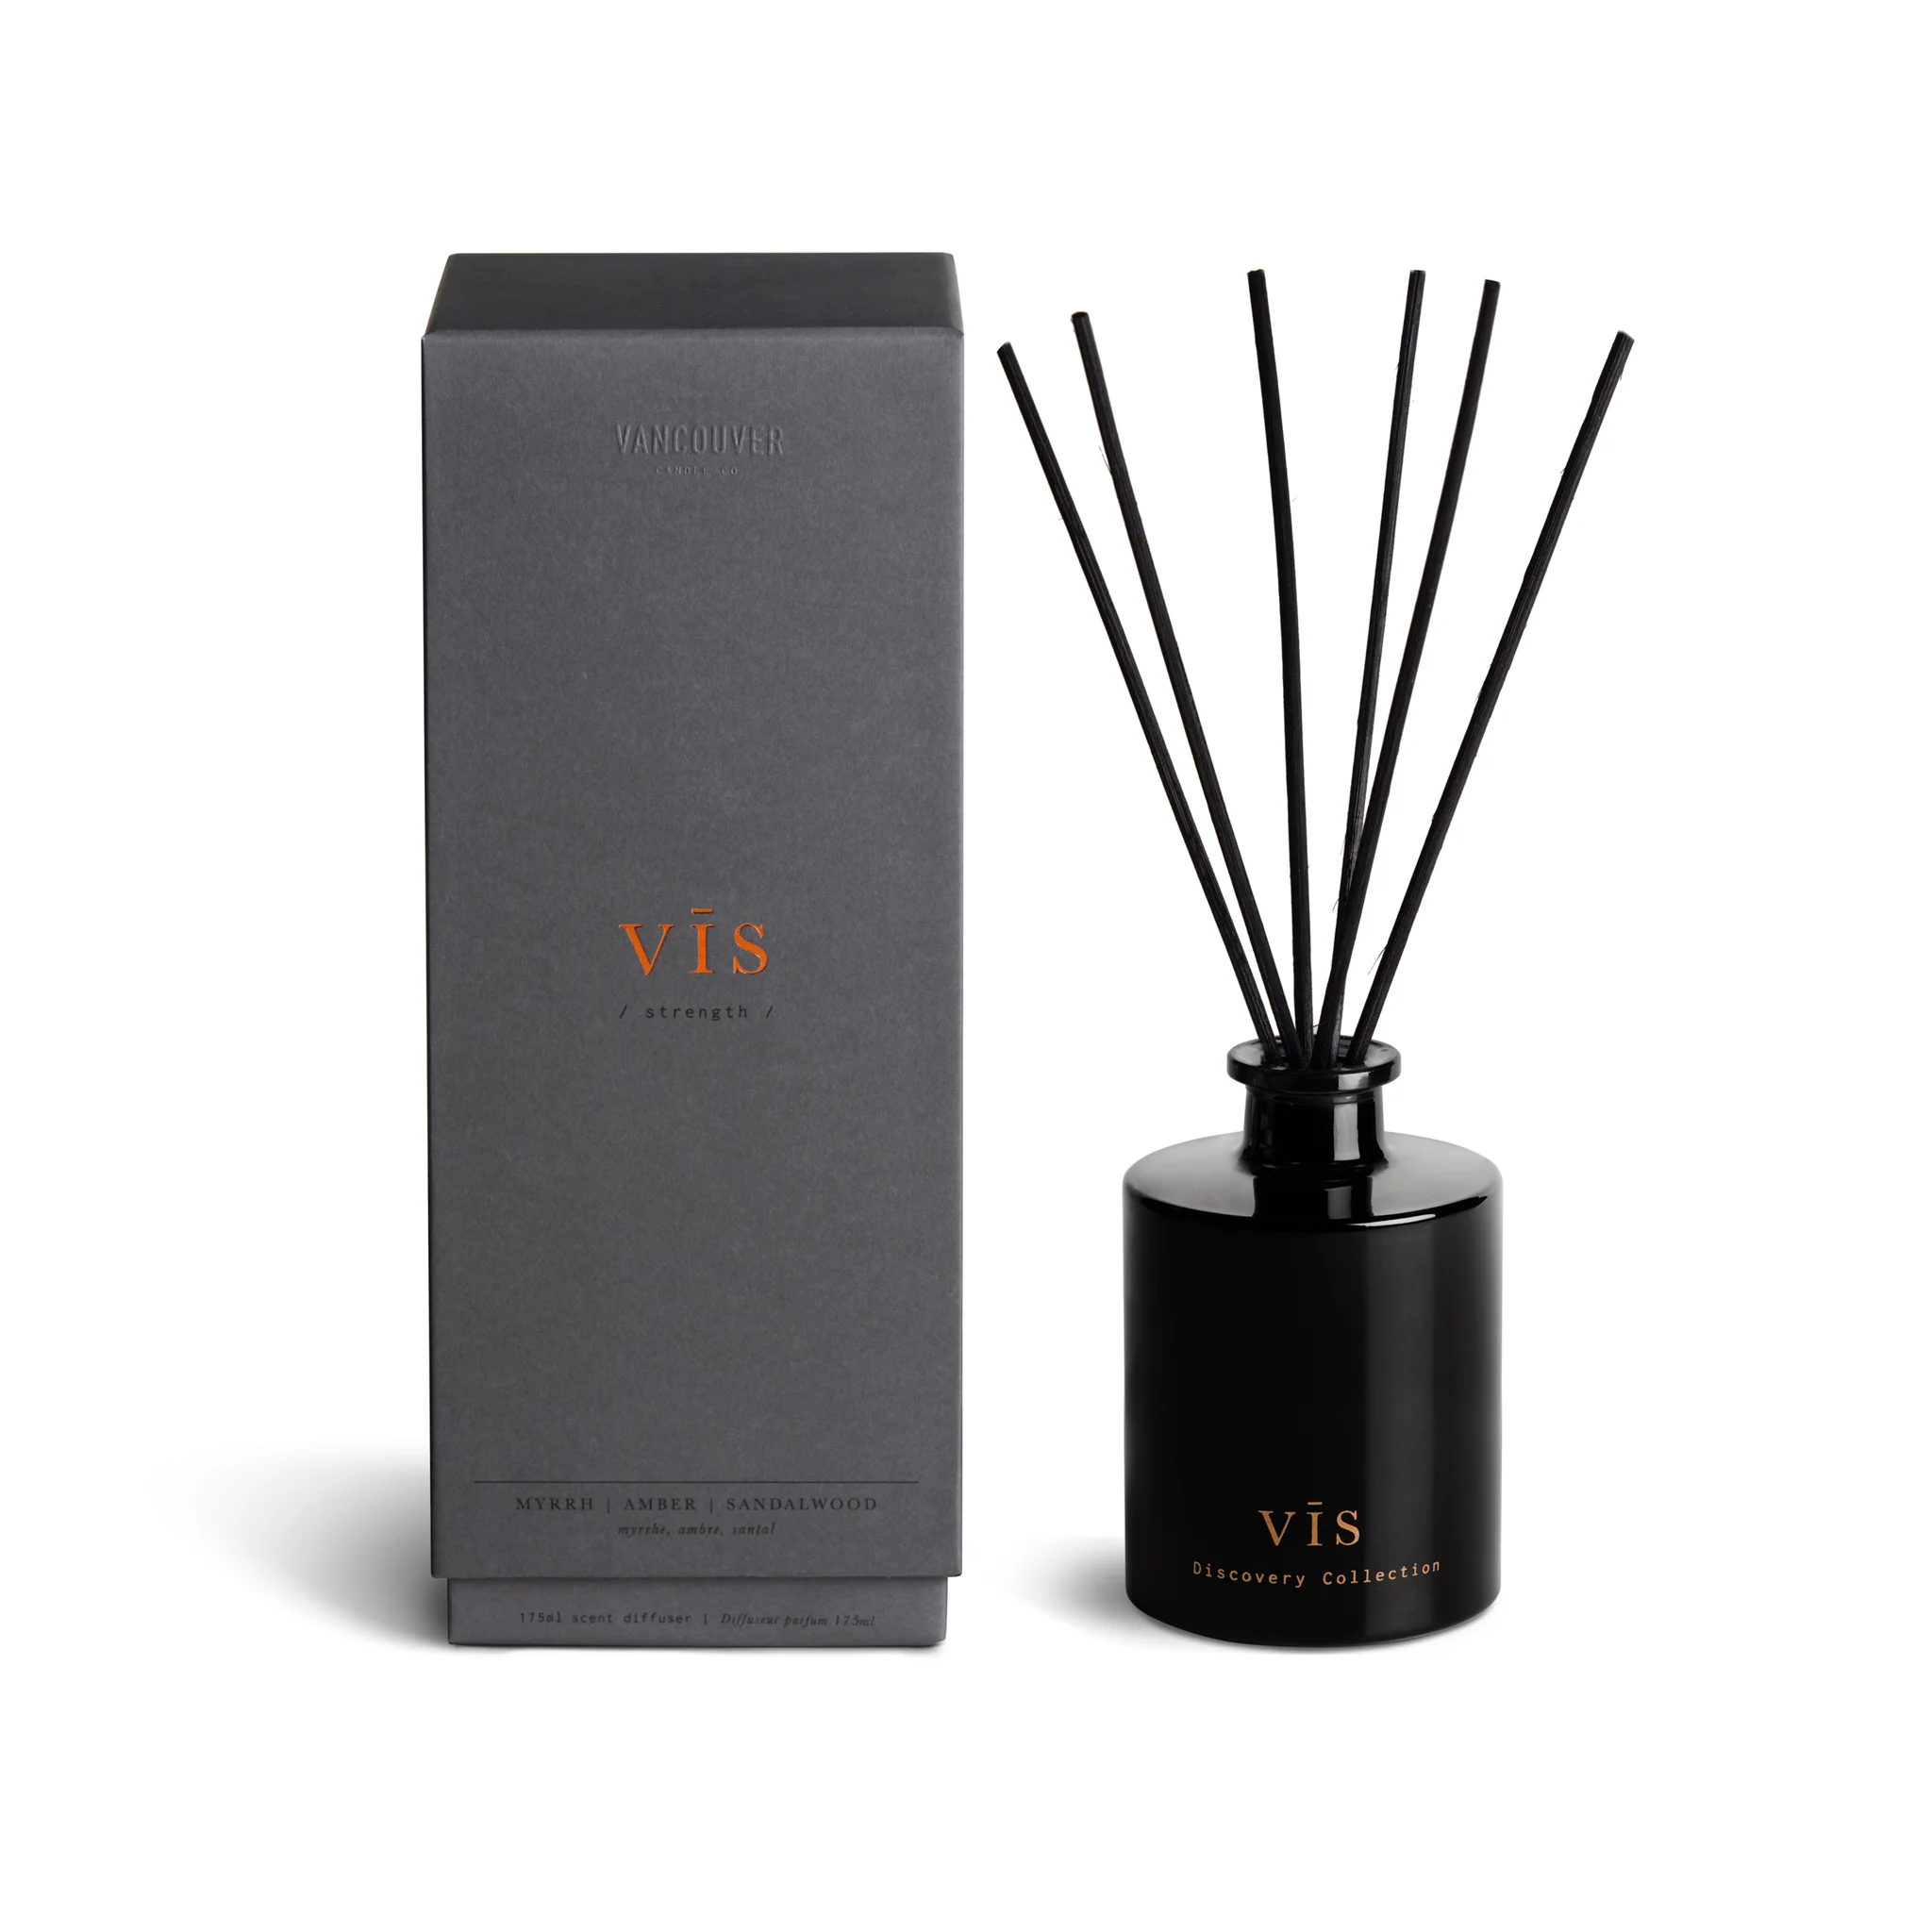 VIS (strength) diffuser | myrrh, amber, sandalwood 175ml